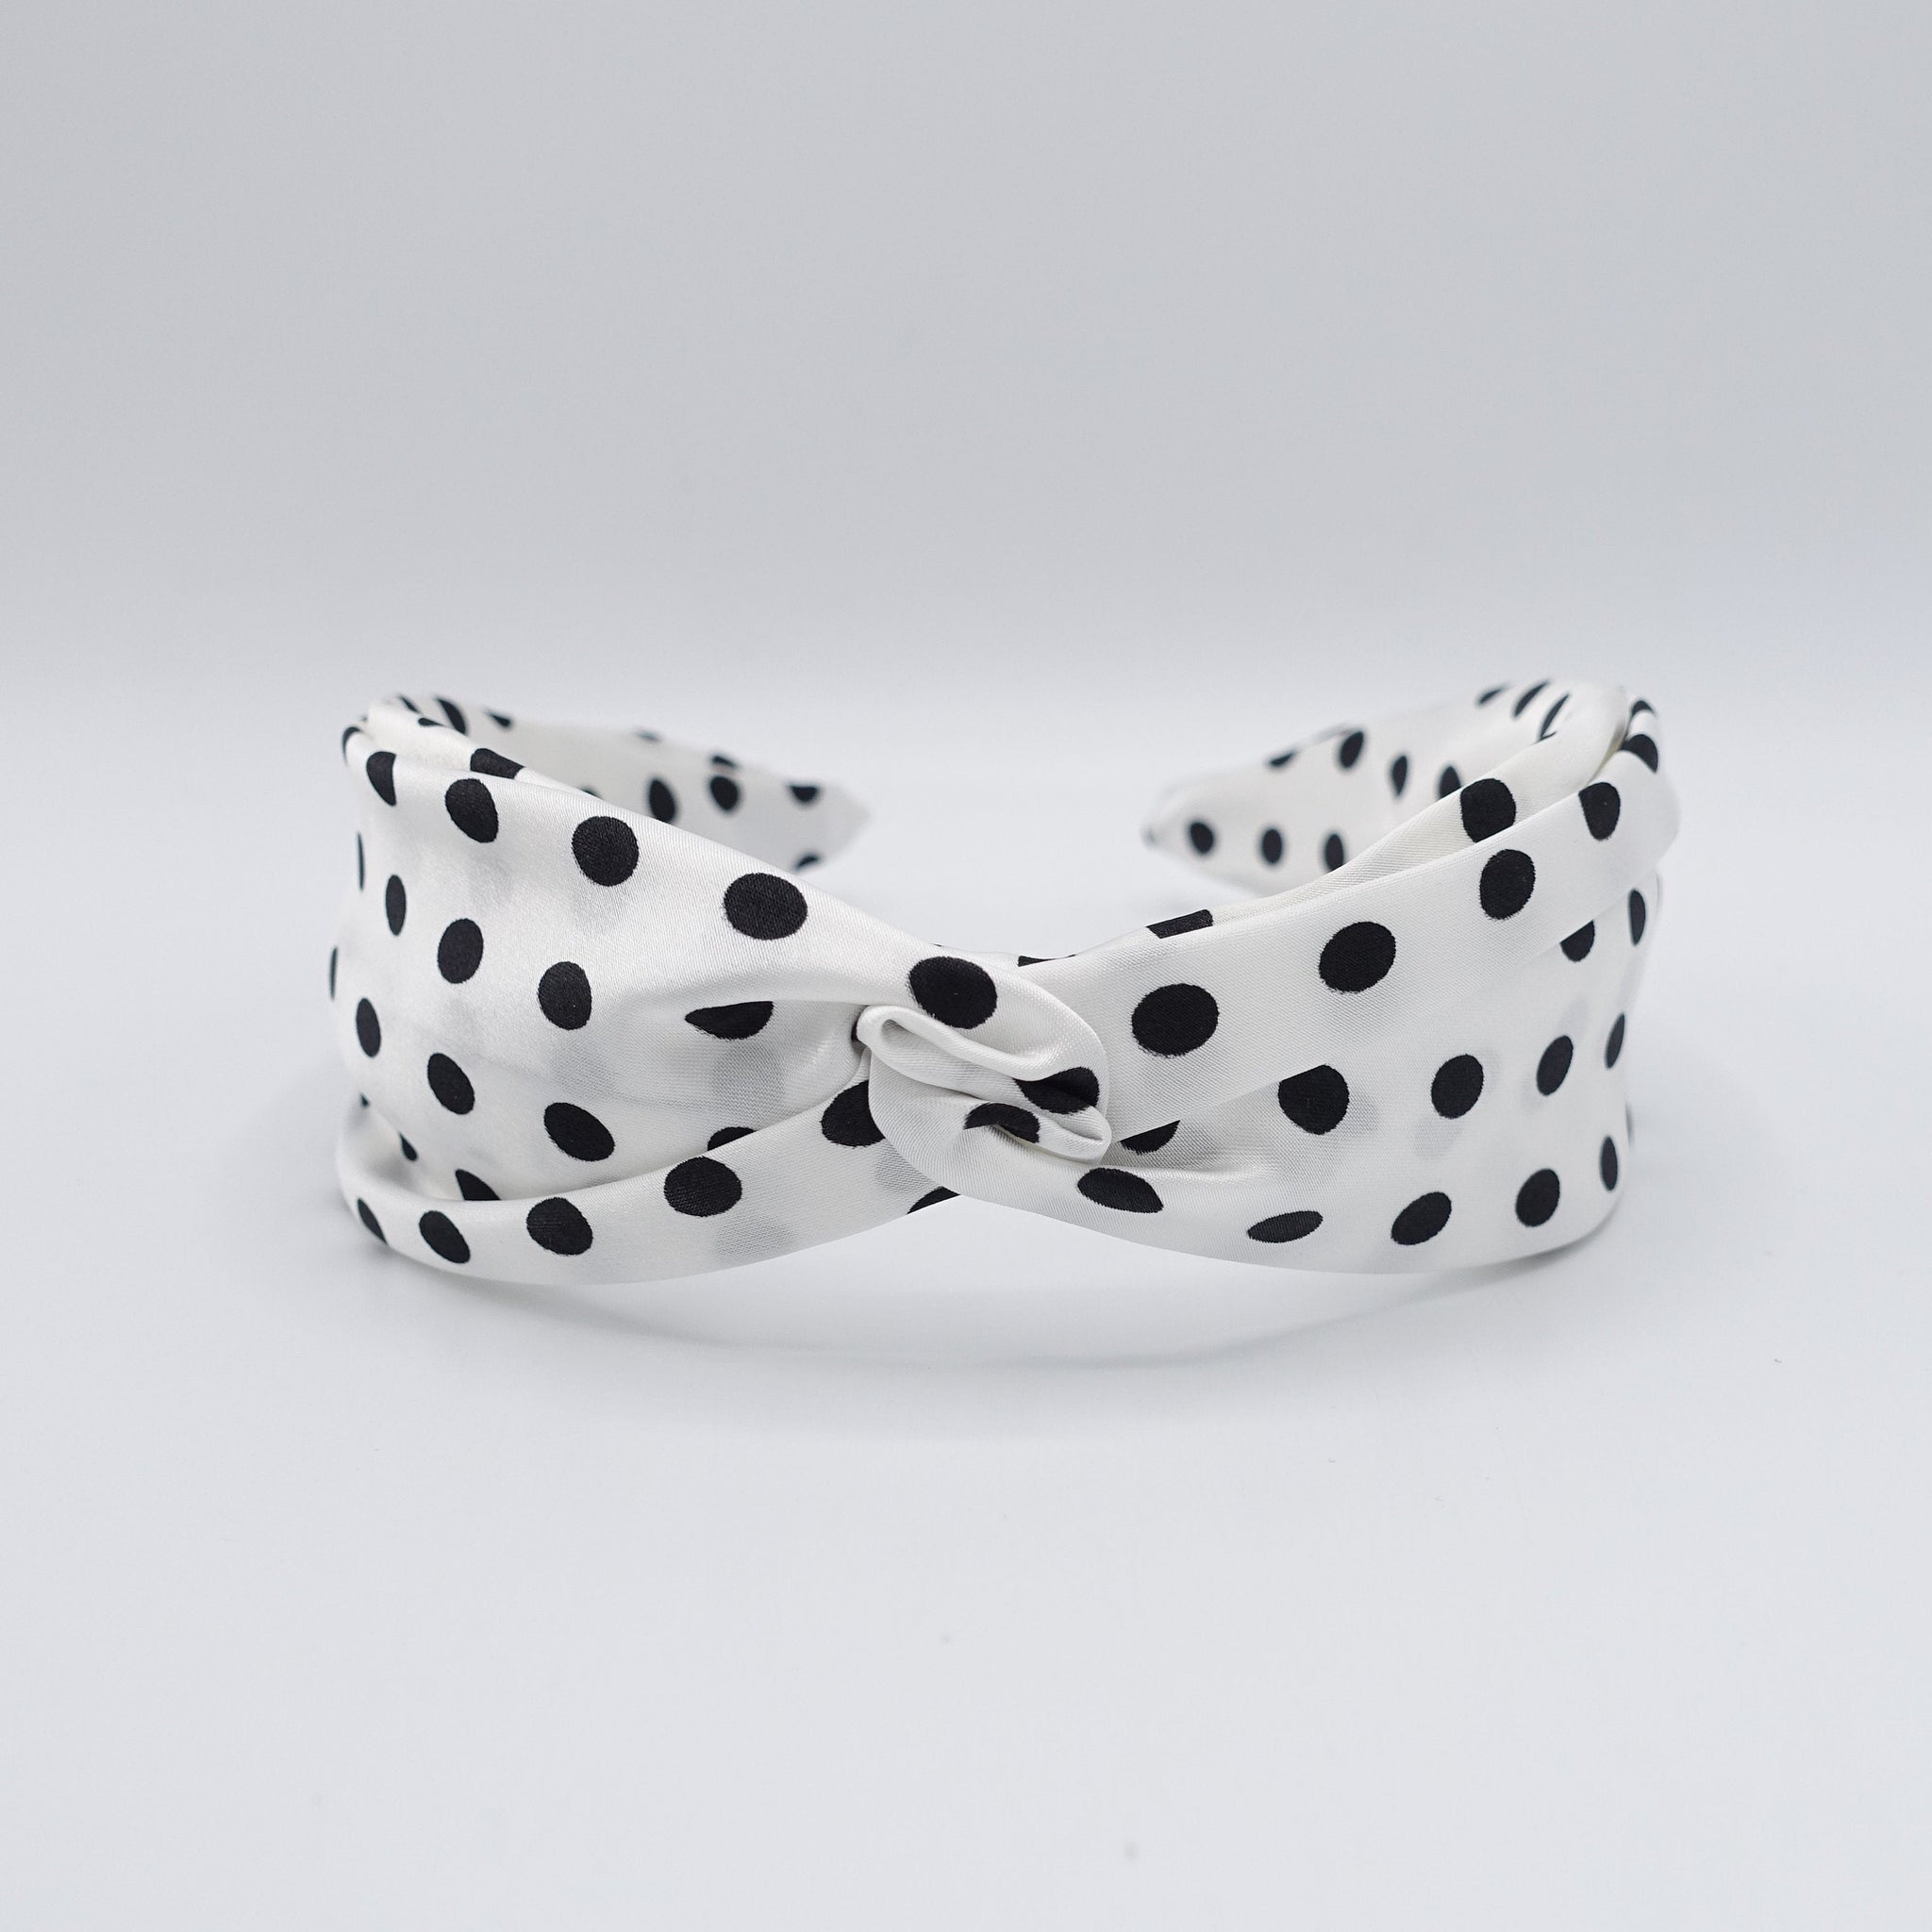 veryshine.com Headband White satin dot cross headband for women